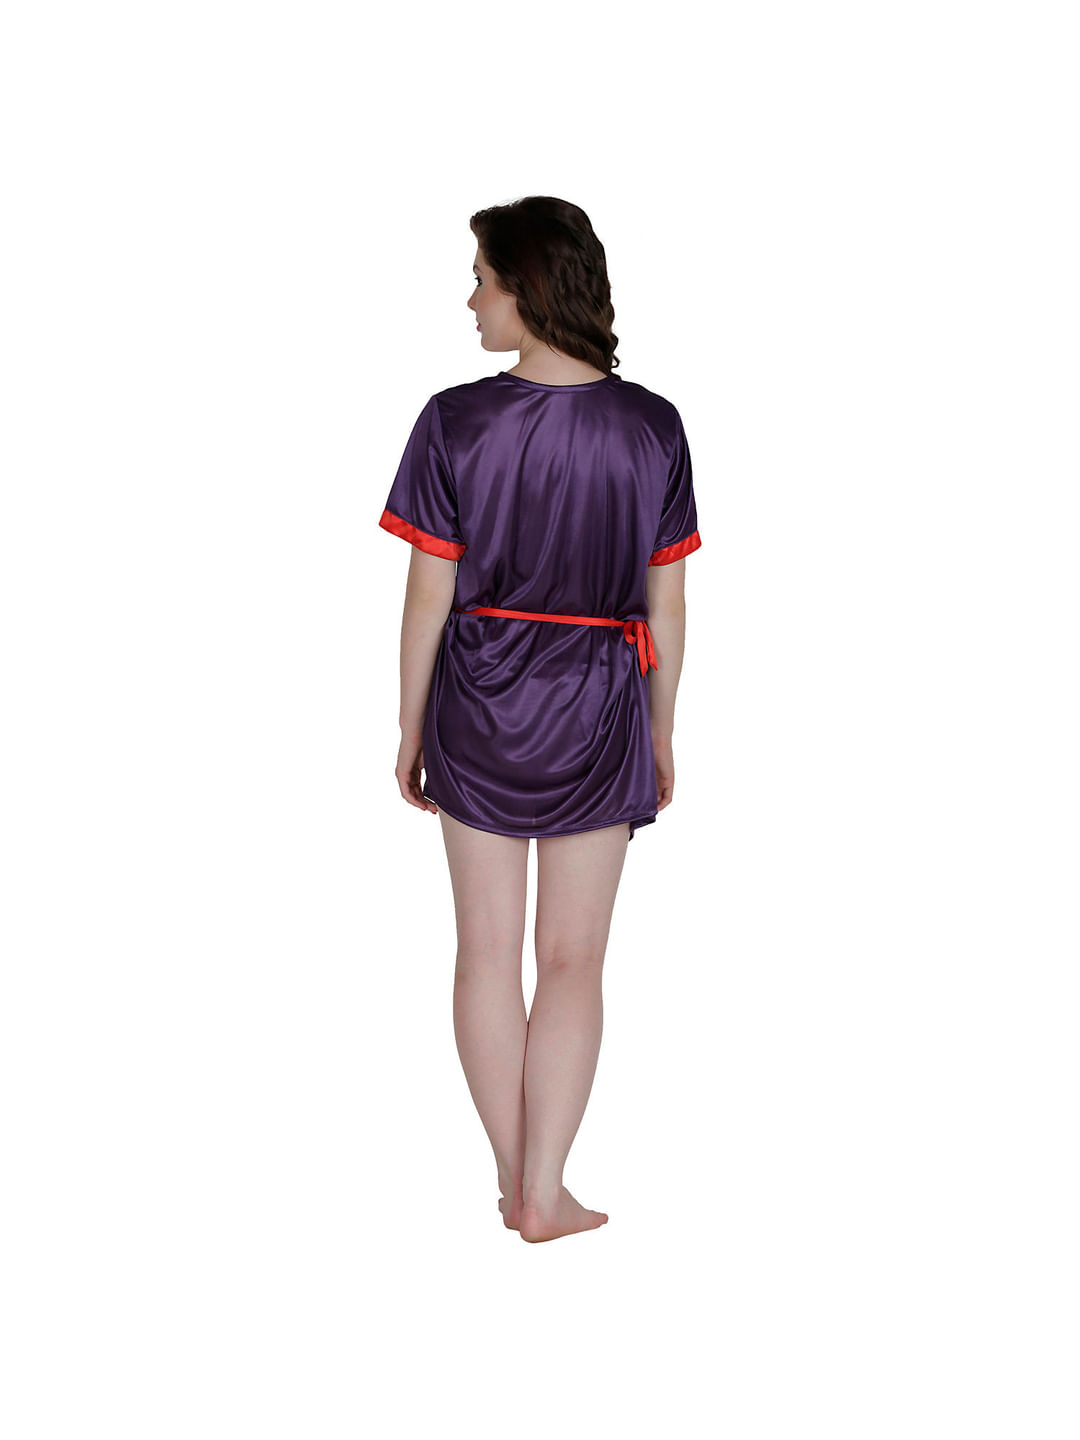 Satin Red, Purple Robe, Housecoat (Free Size, HC-55)